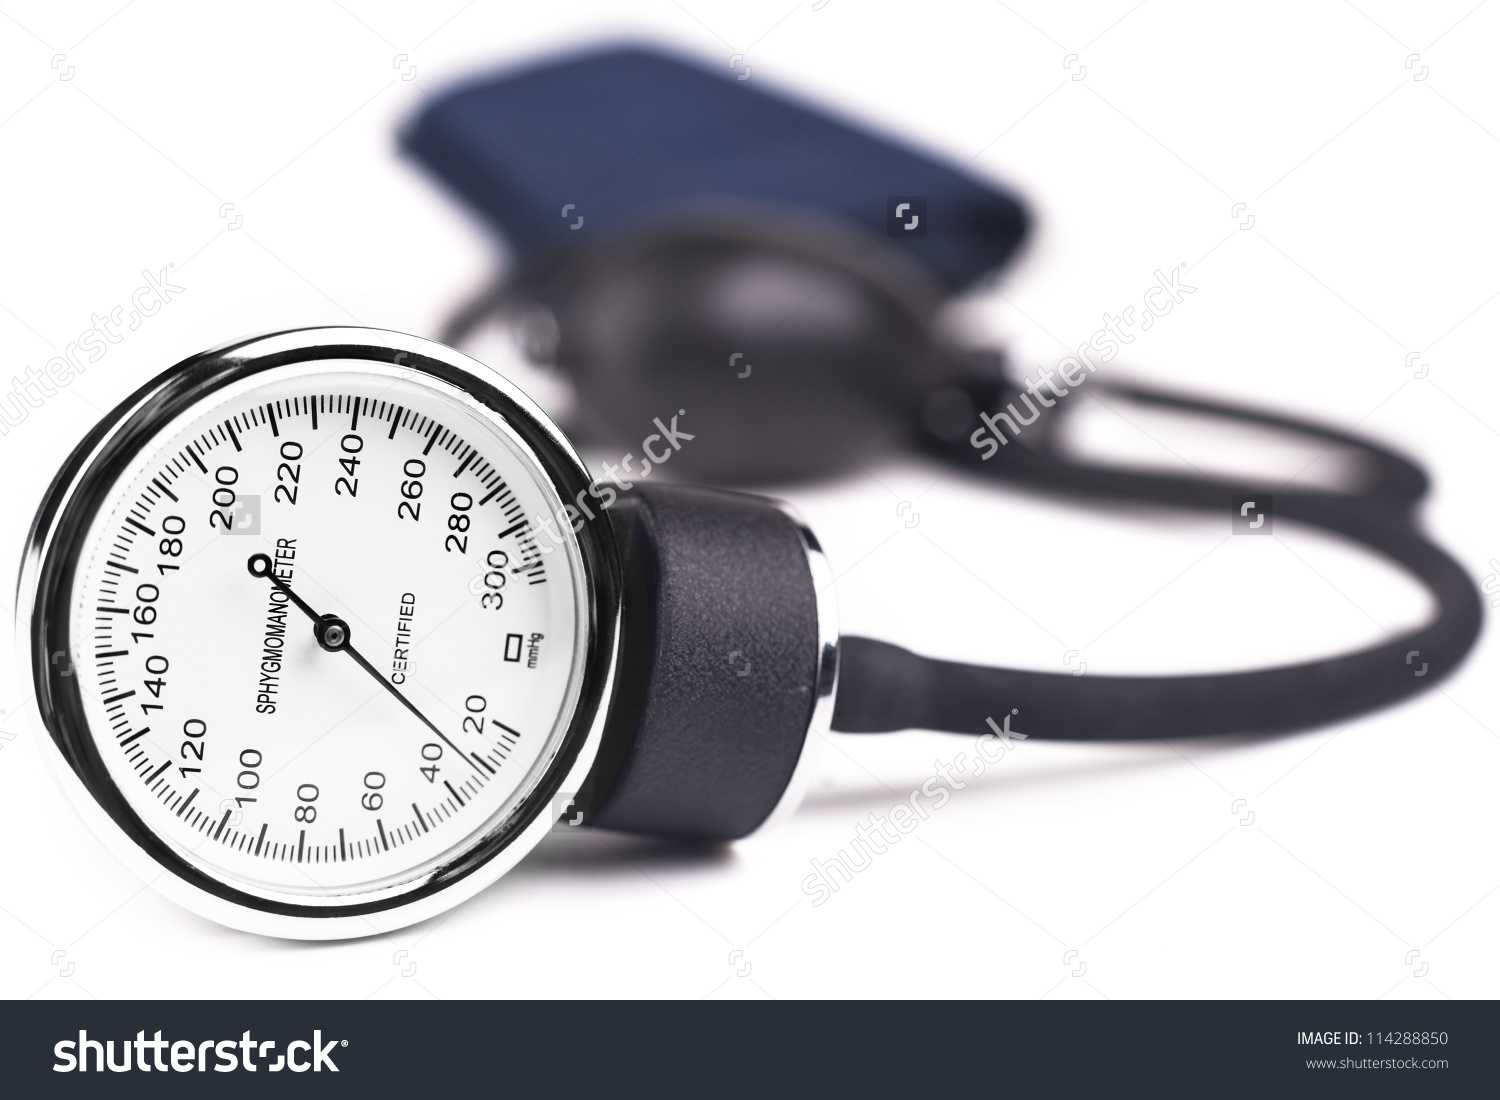 Self-monitoring blood pressure introduced at Birmingham YMCA